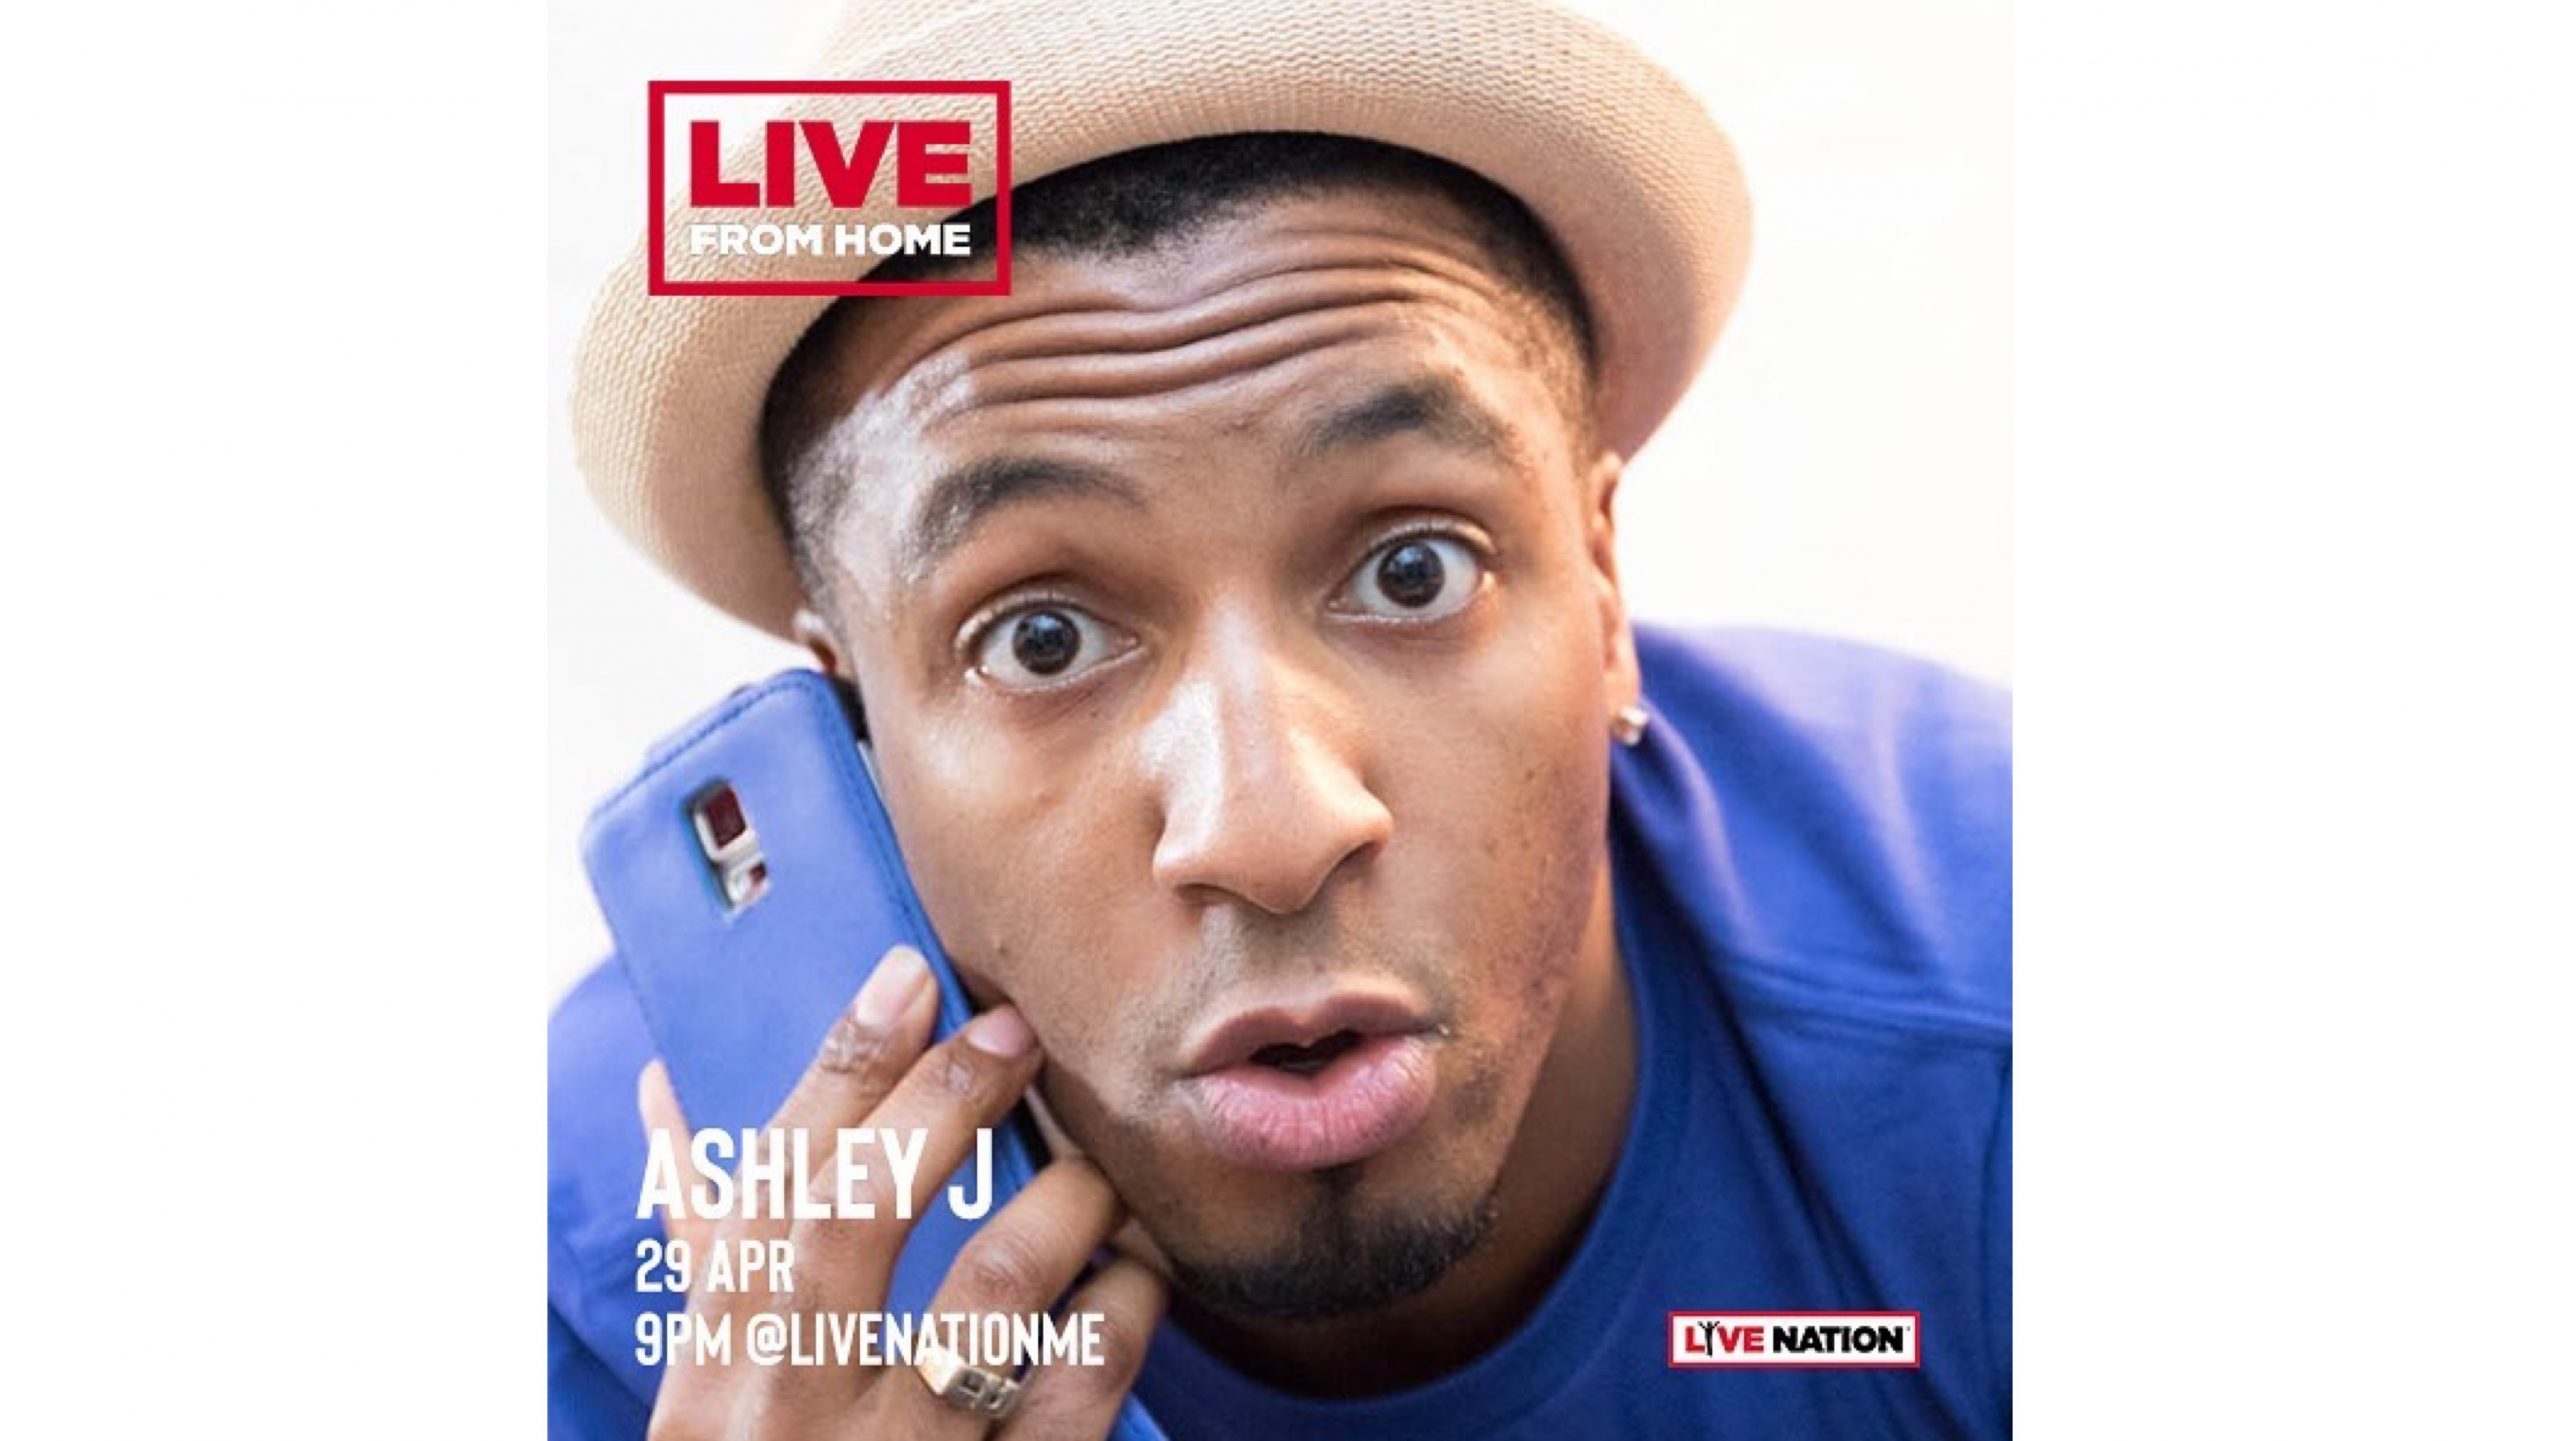 Ashley J Live Performance - Coming Soon in UAE